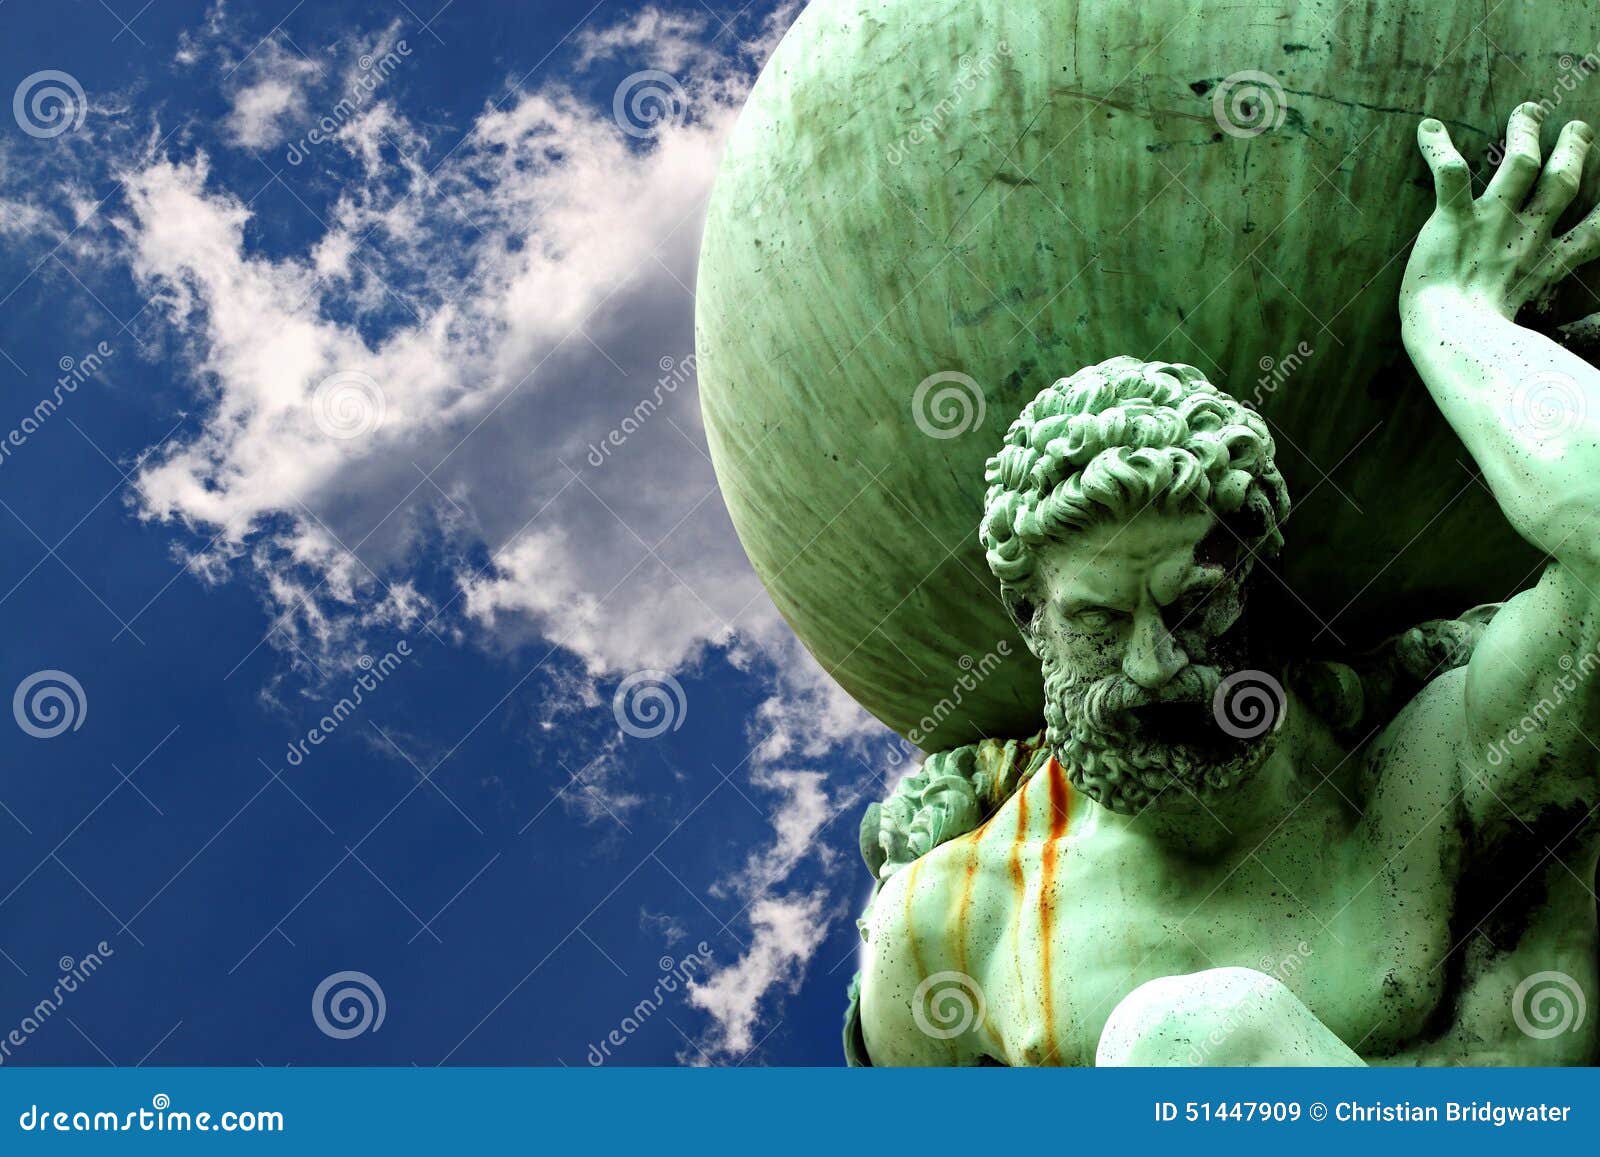 statue of atlas cloud a